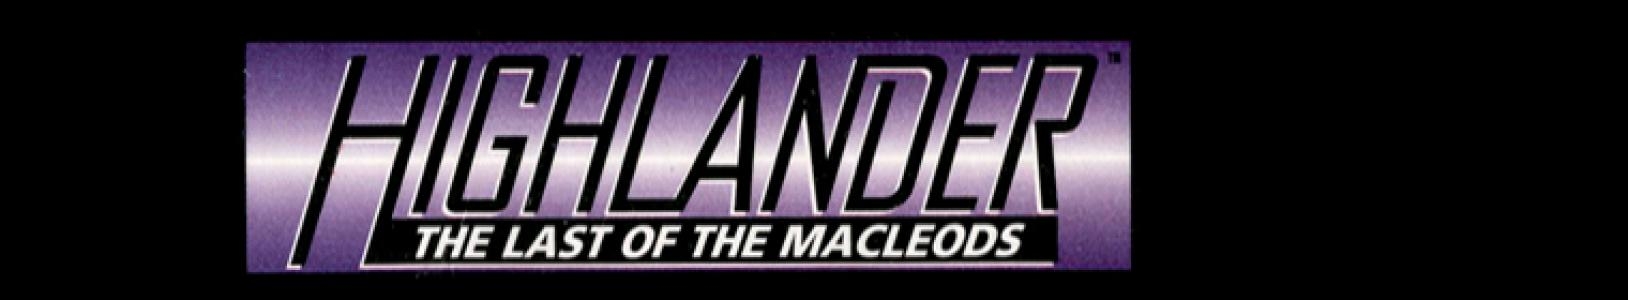 Highlander: The Last of the MacLeods banner